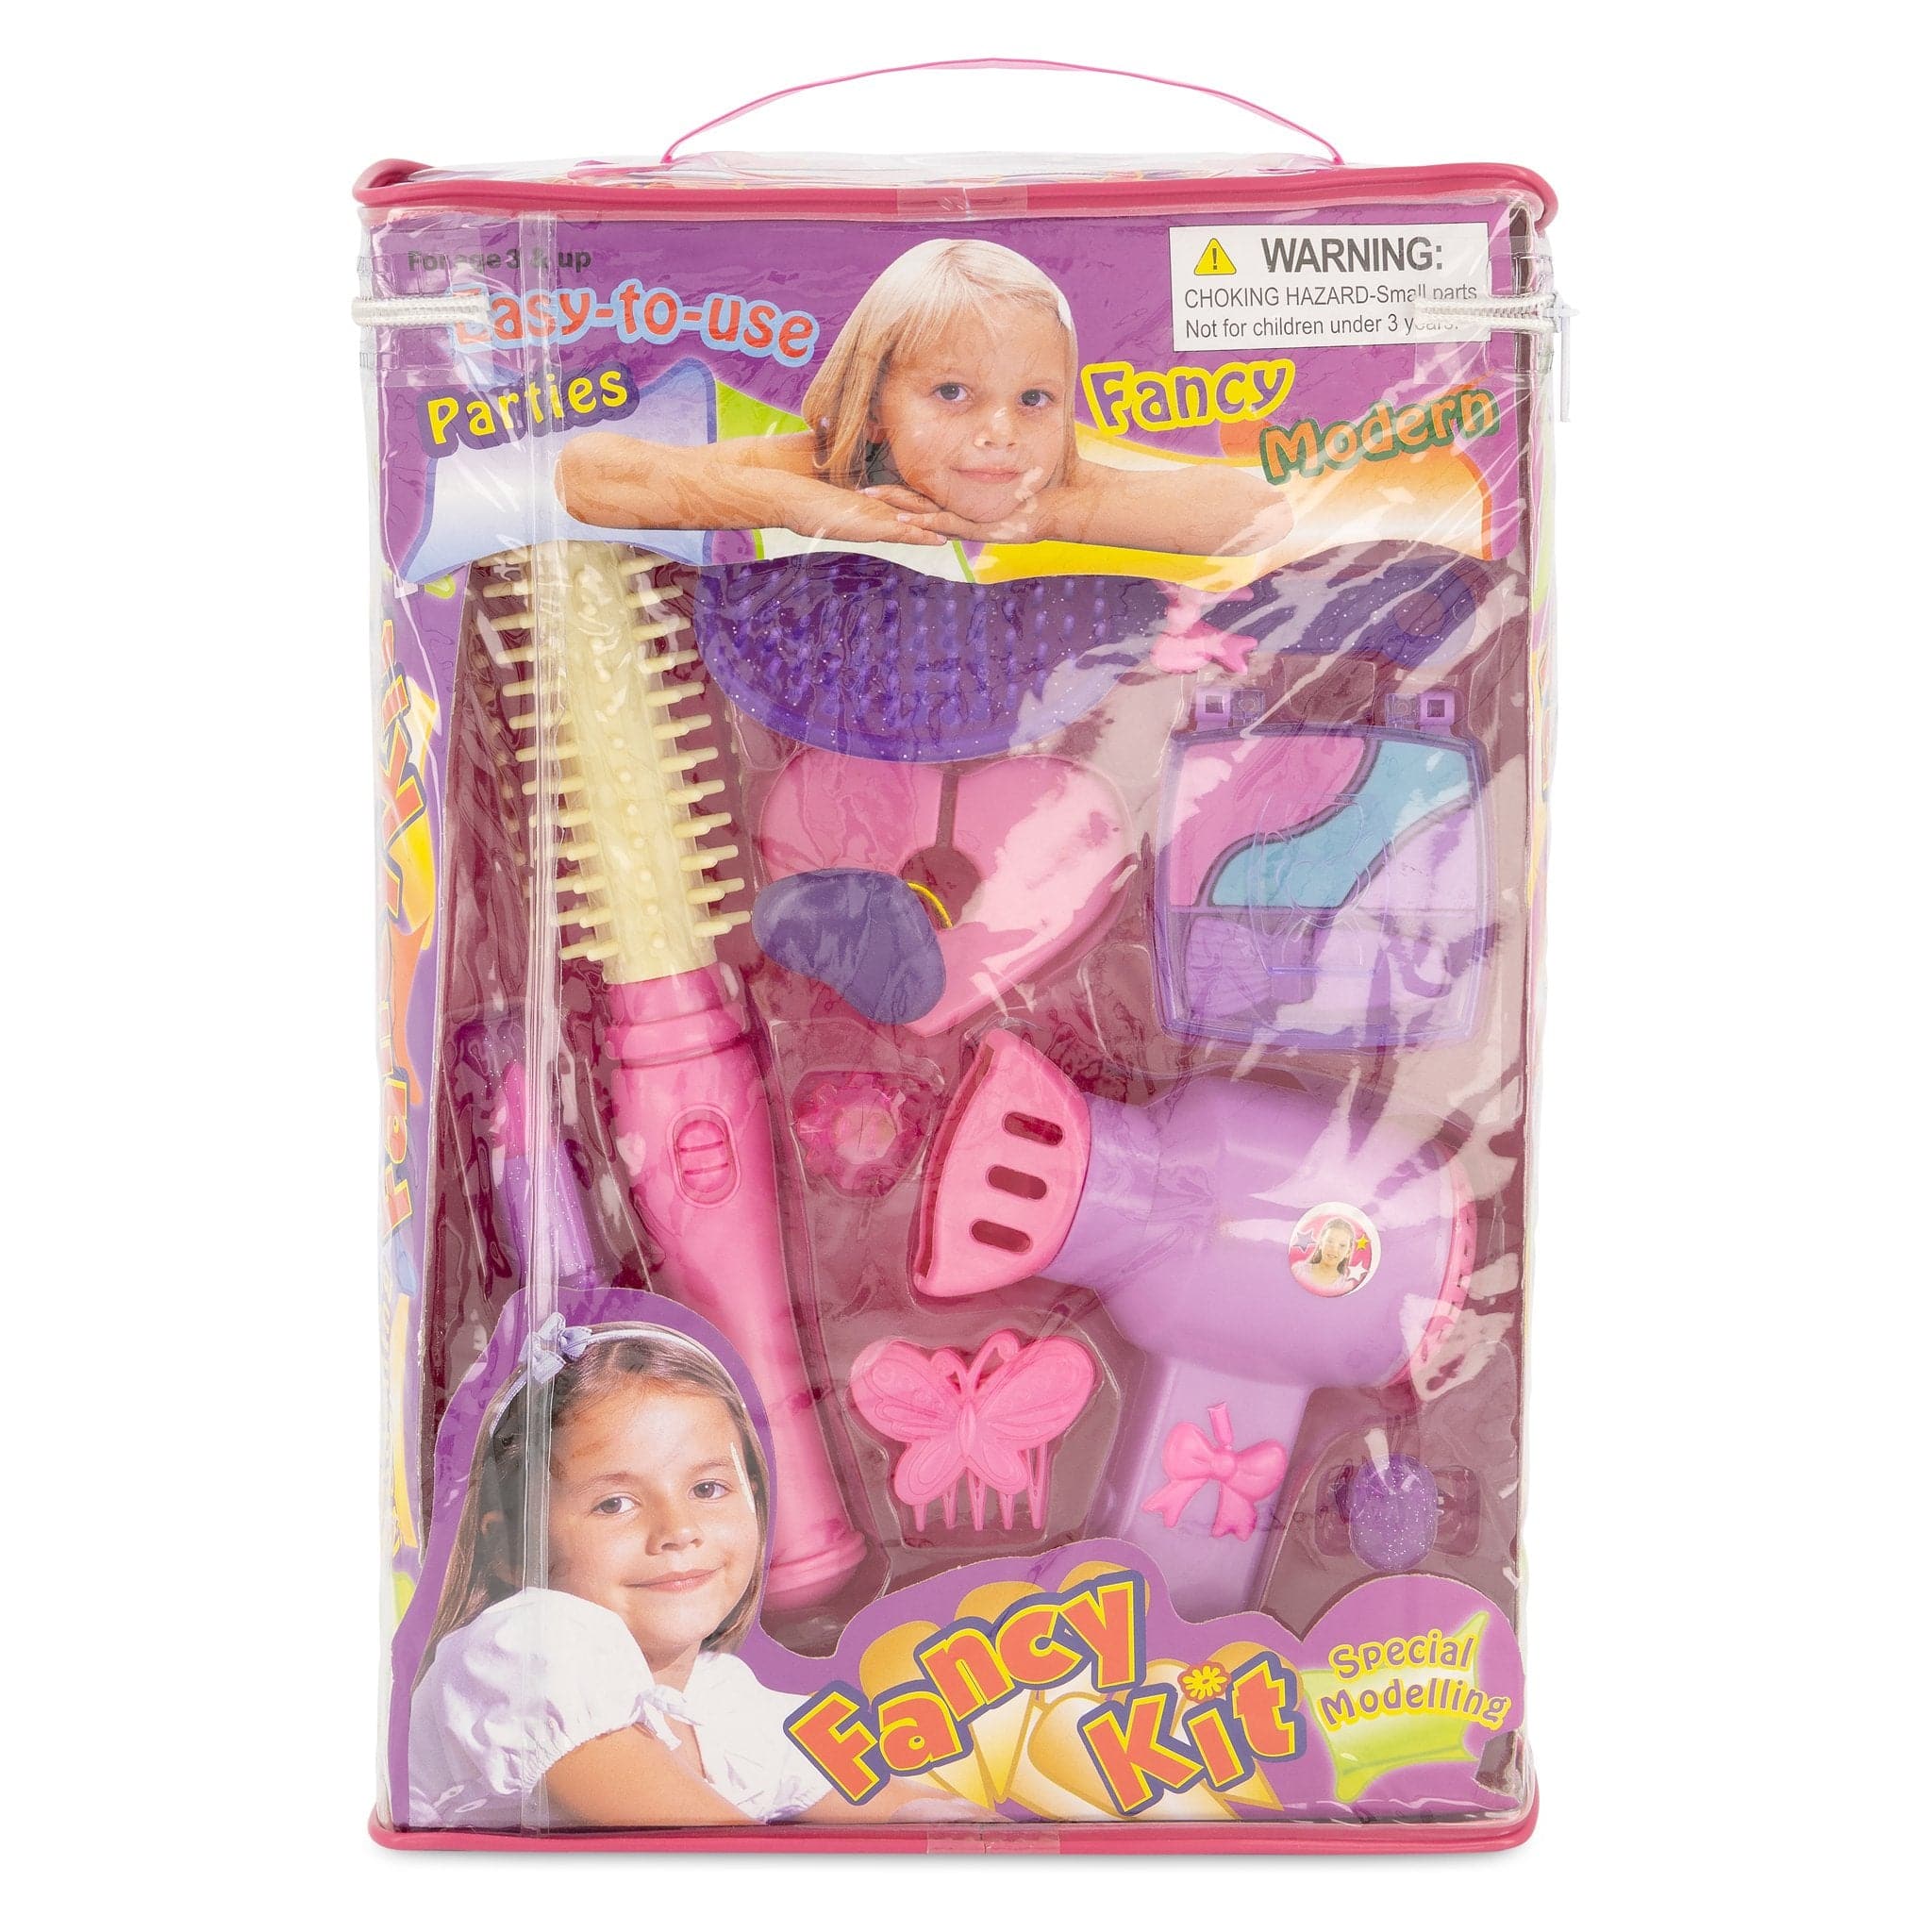 Fancy Make-Up Kit Toy Set 5056150285458